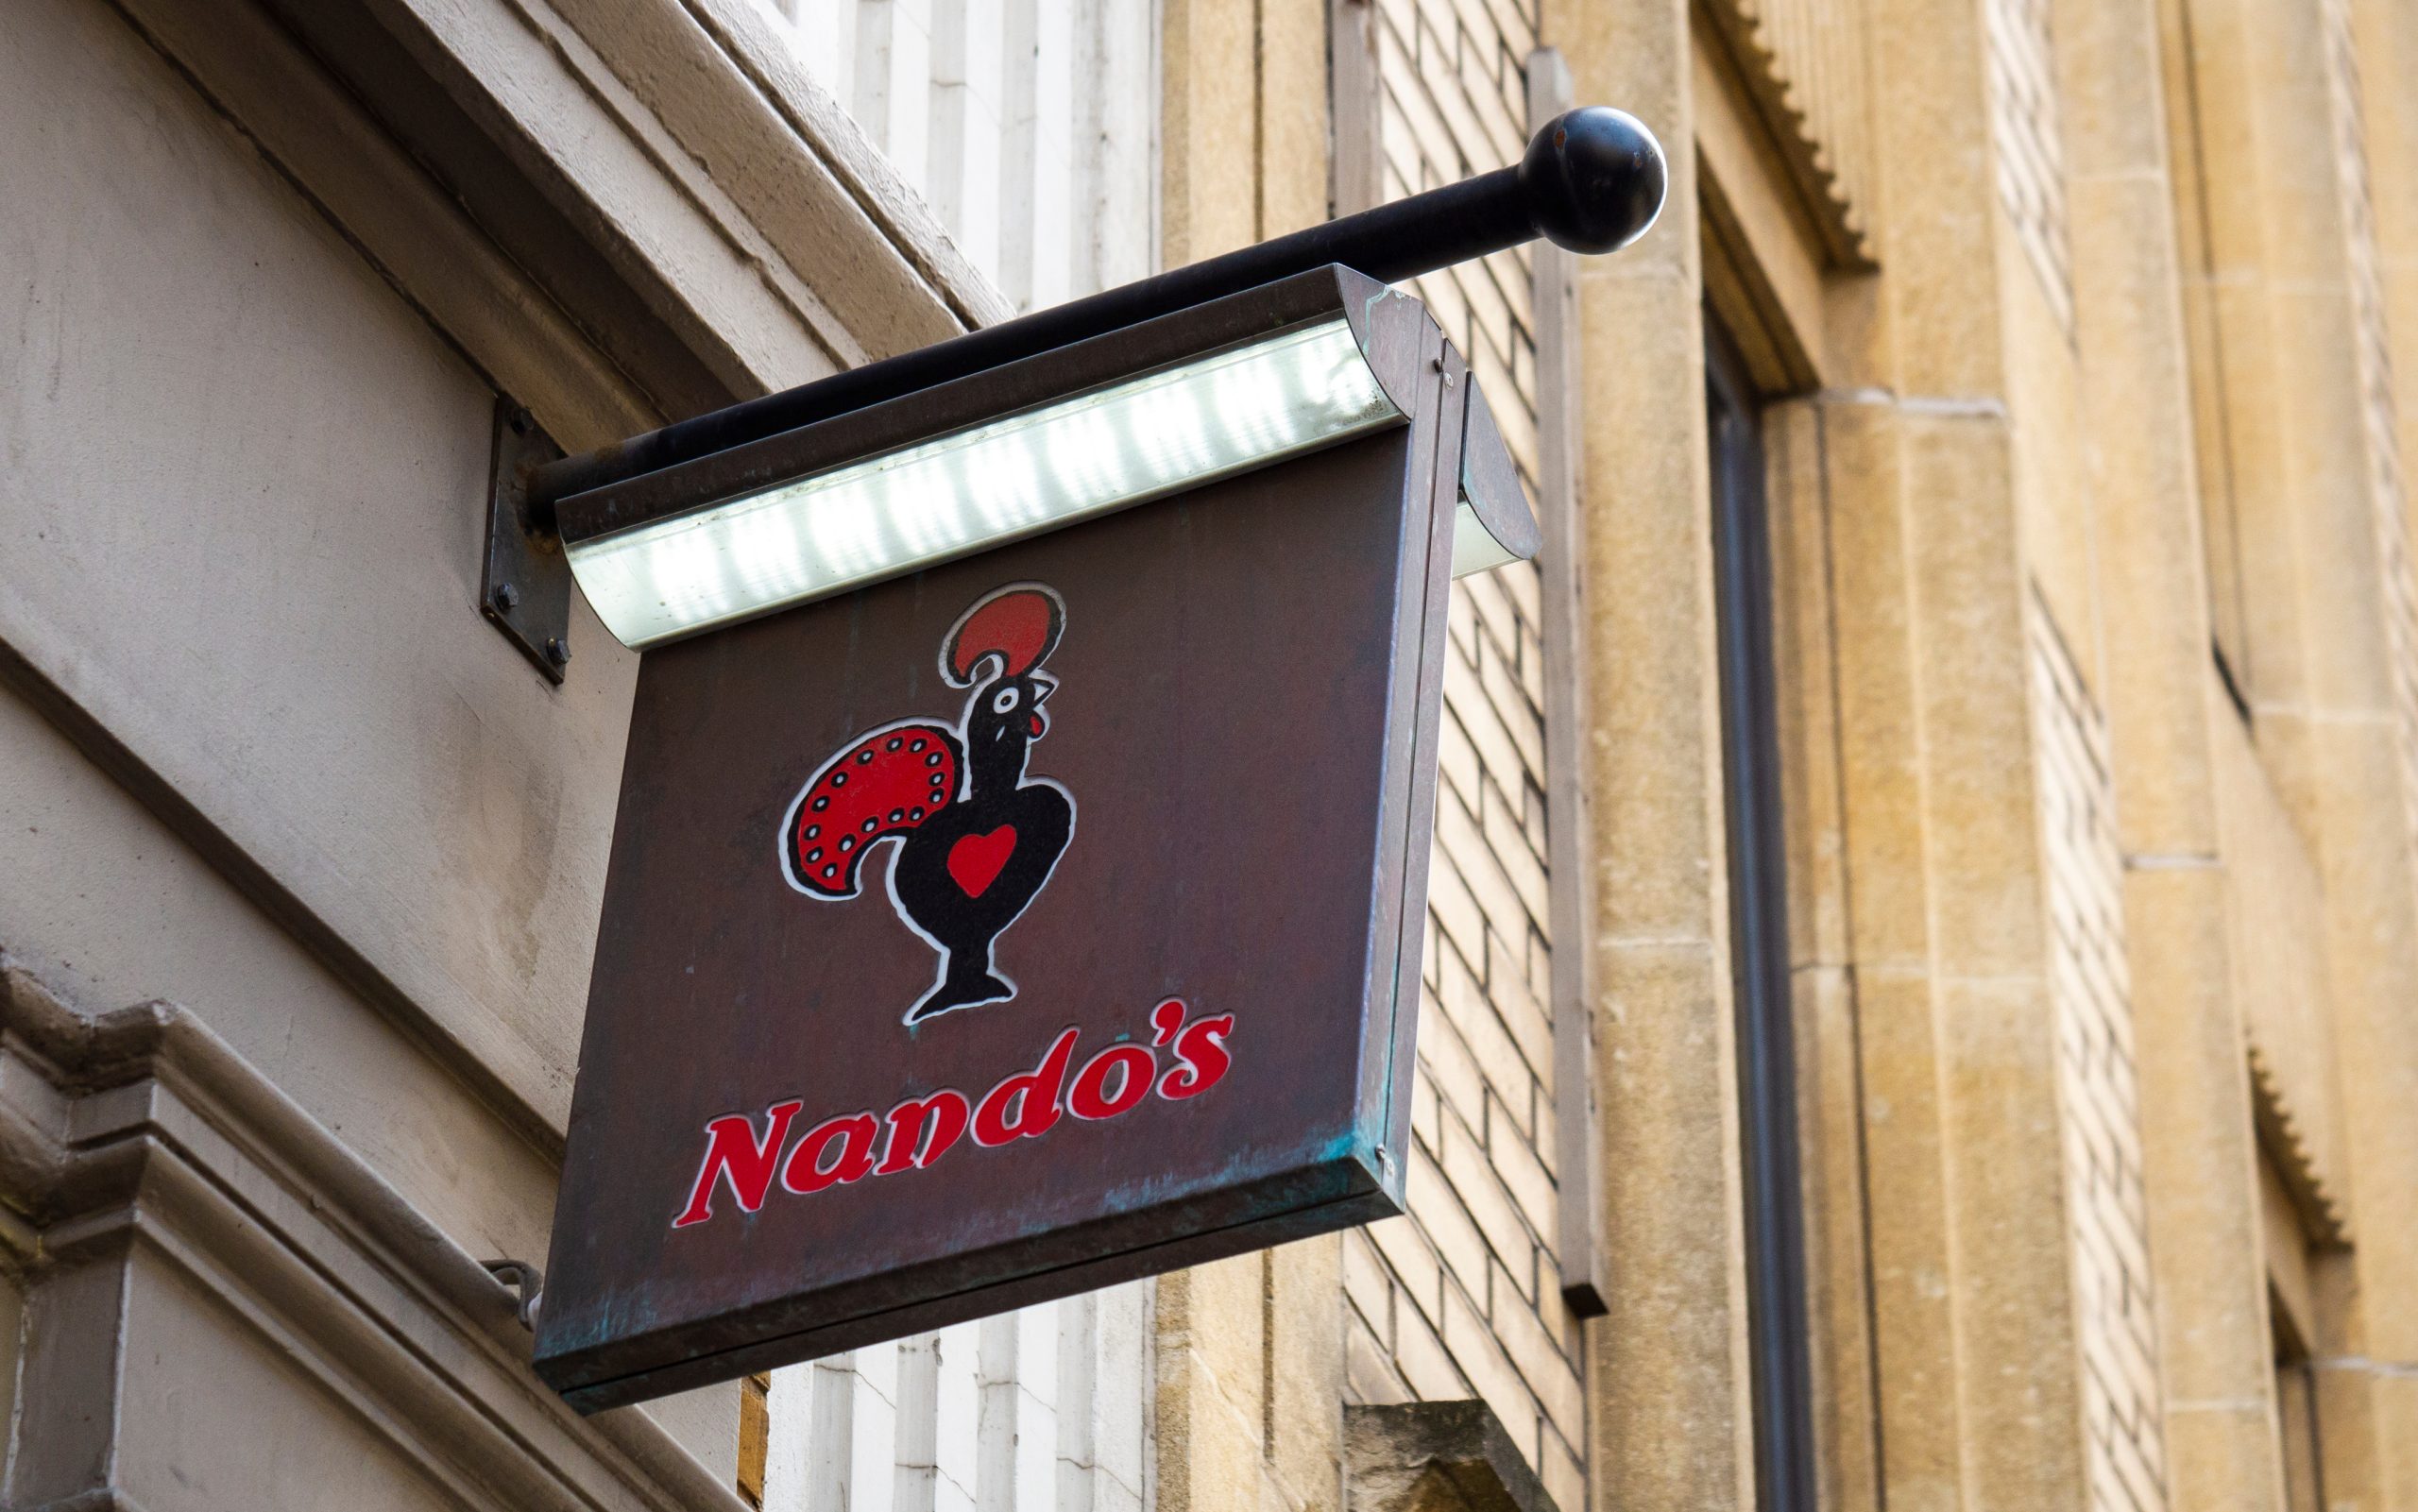 Nando’s set to open new restaurant in Coleraine